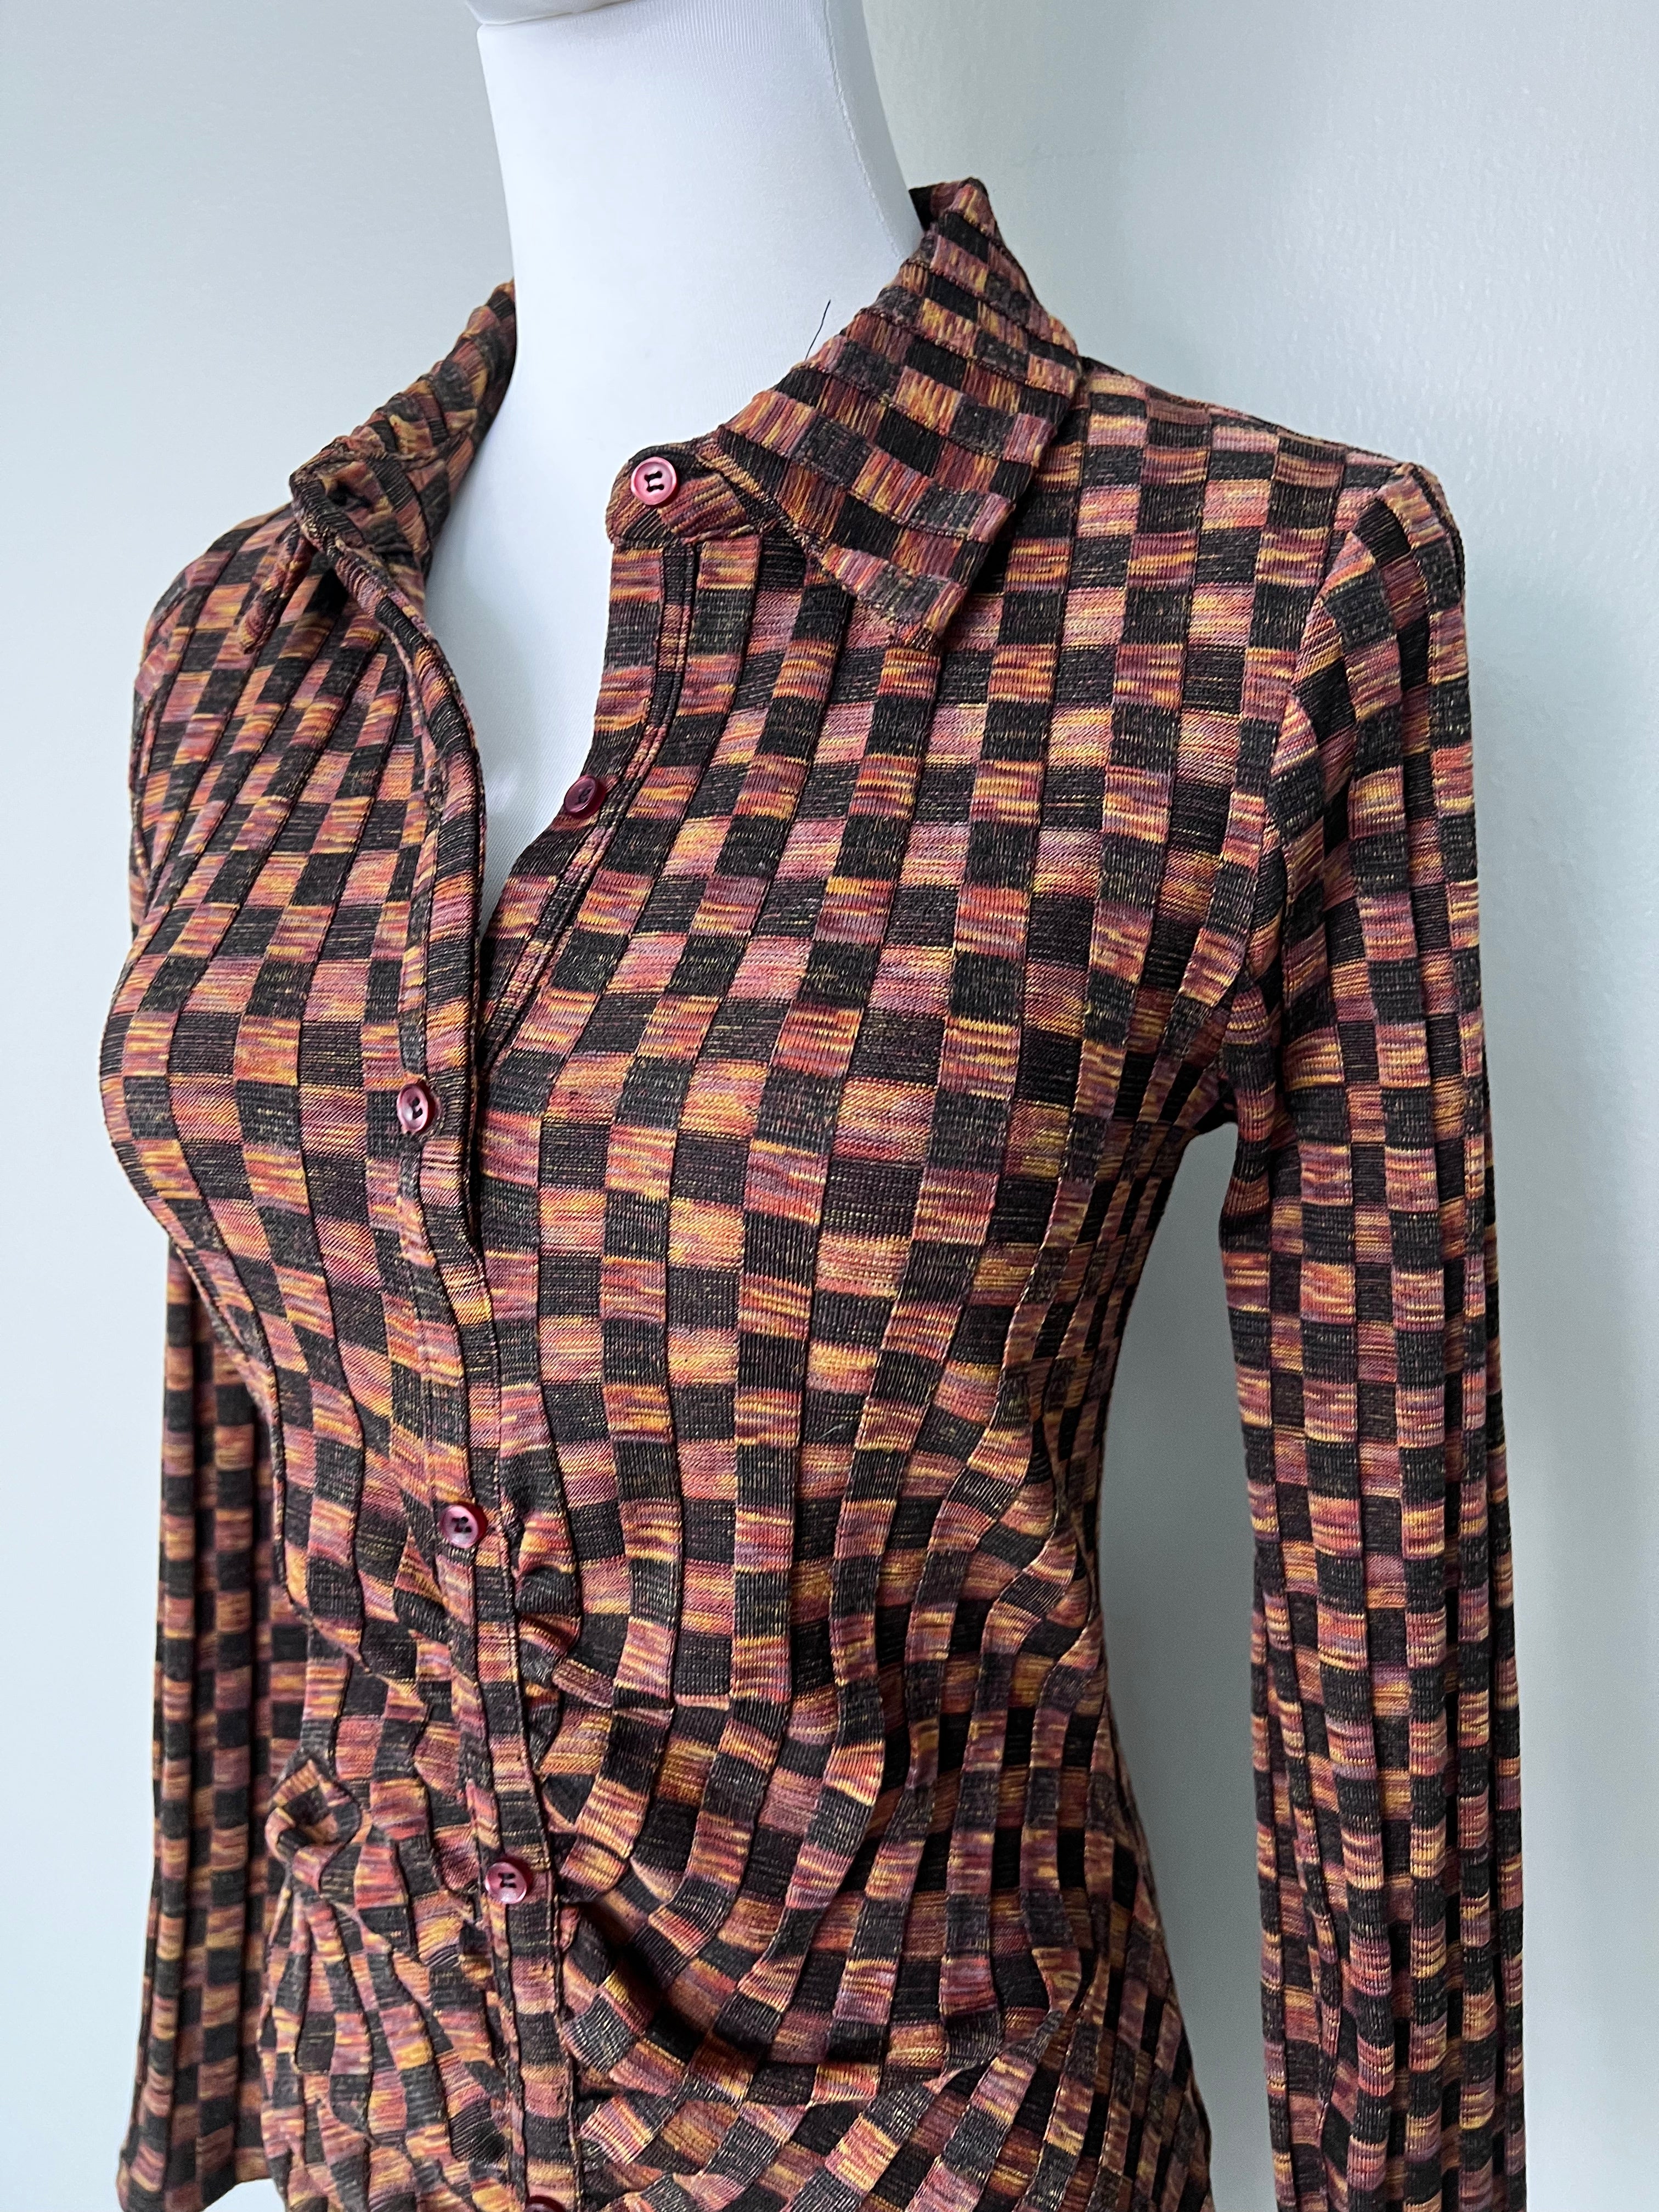 Collared Brown and black checkered dress - ZARA